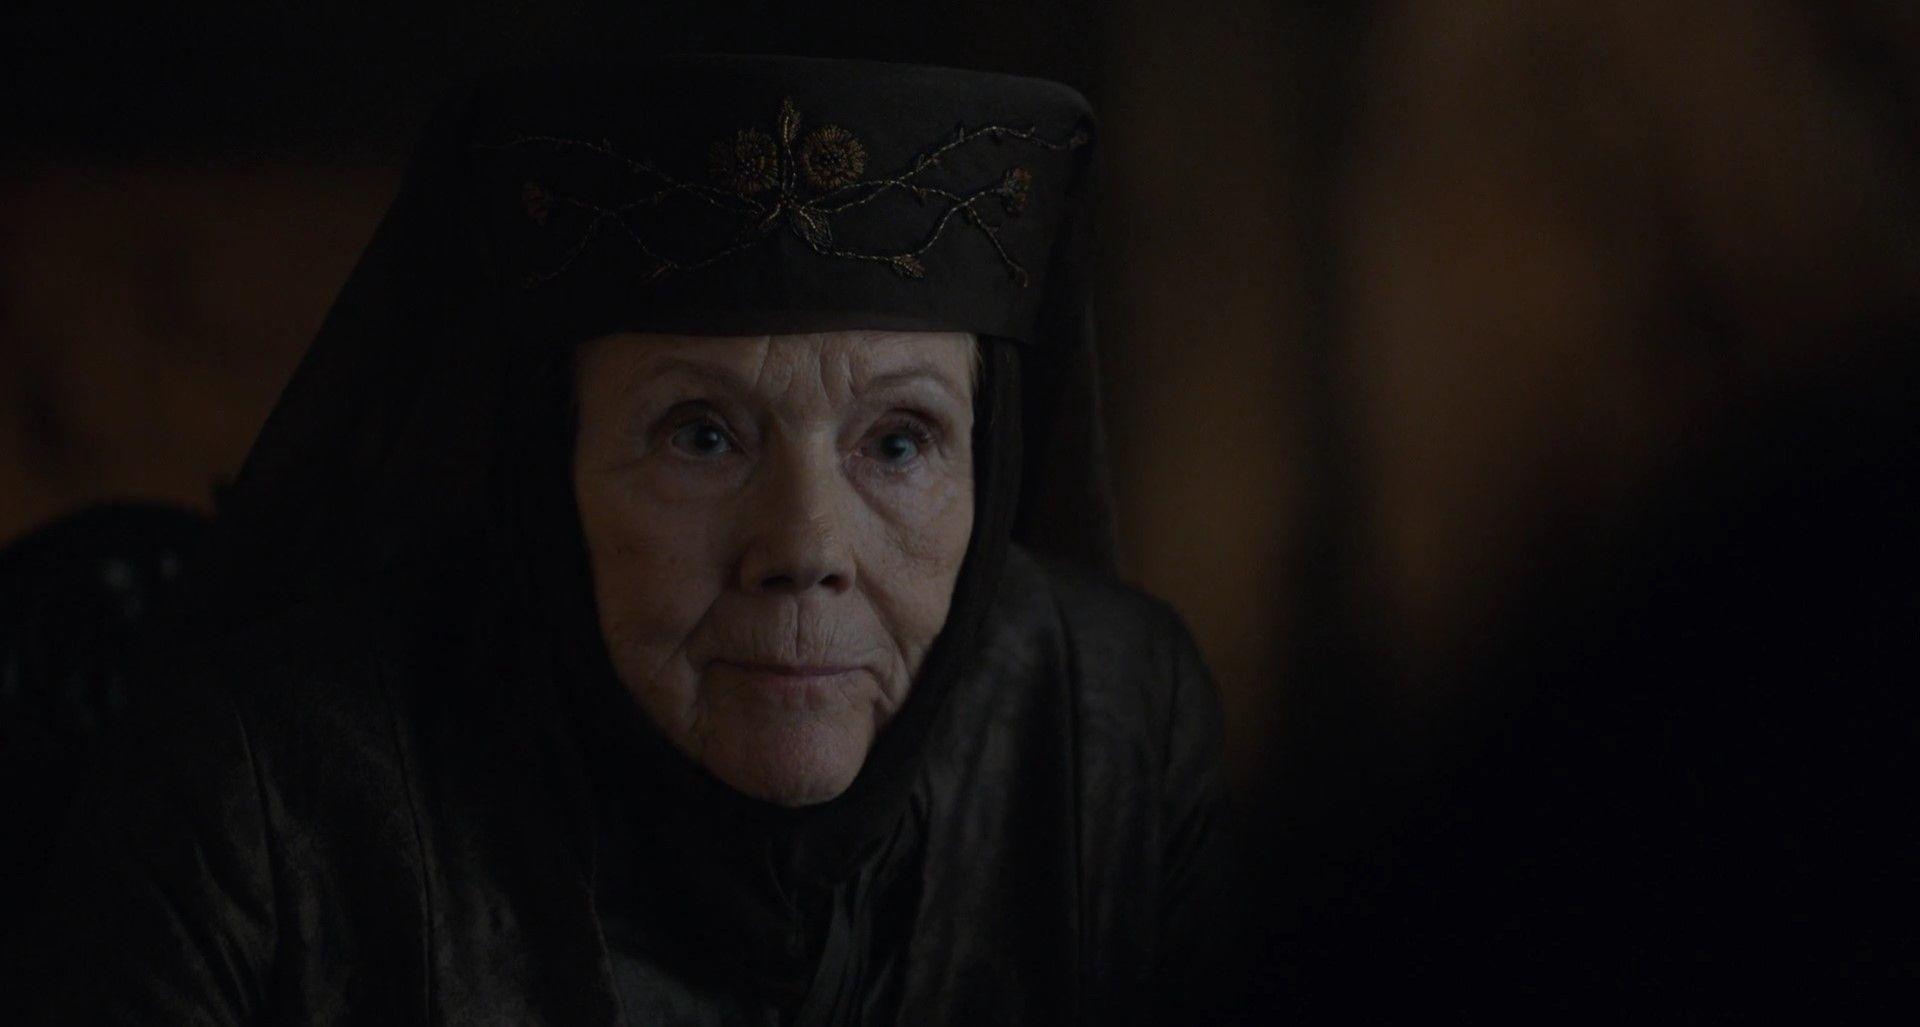 Game of Thrones' greatest hero is still Olenna Tyrell